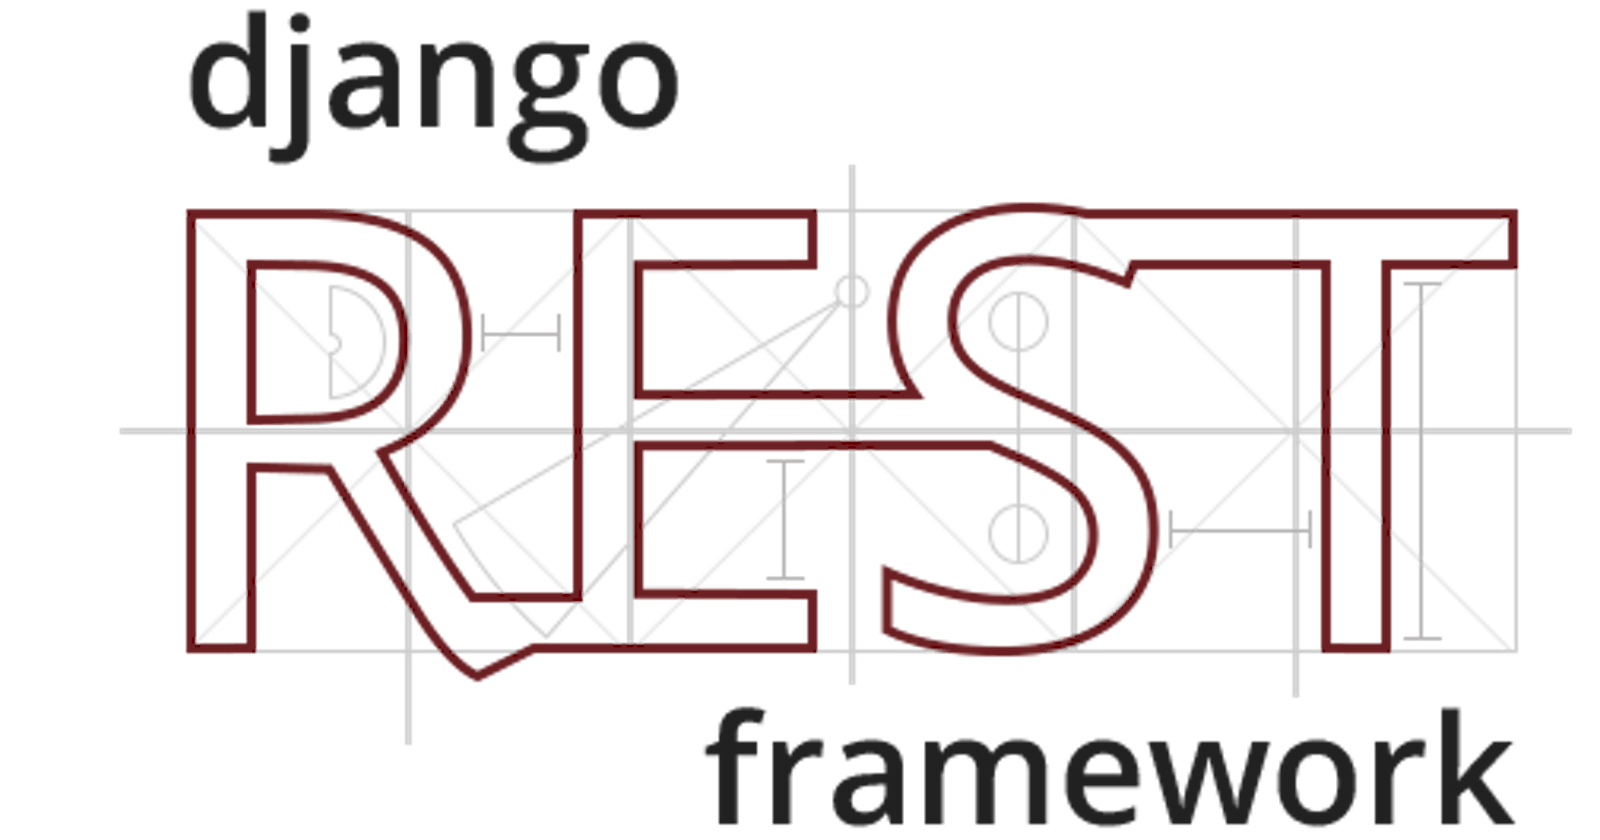 File Upload with Django - Building REST API with Django (Part 2)